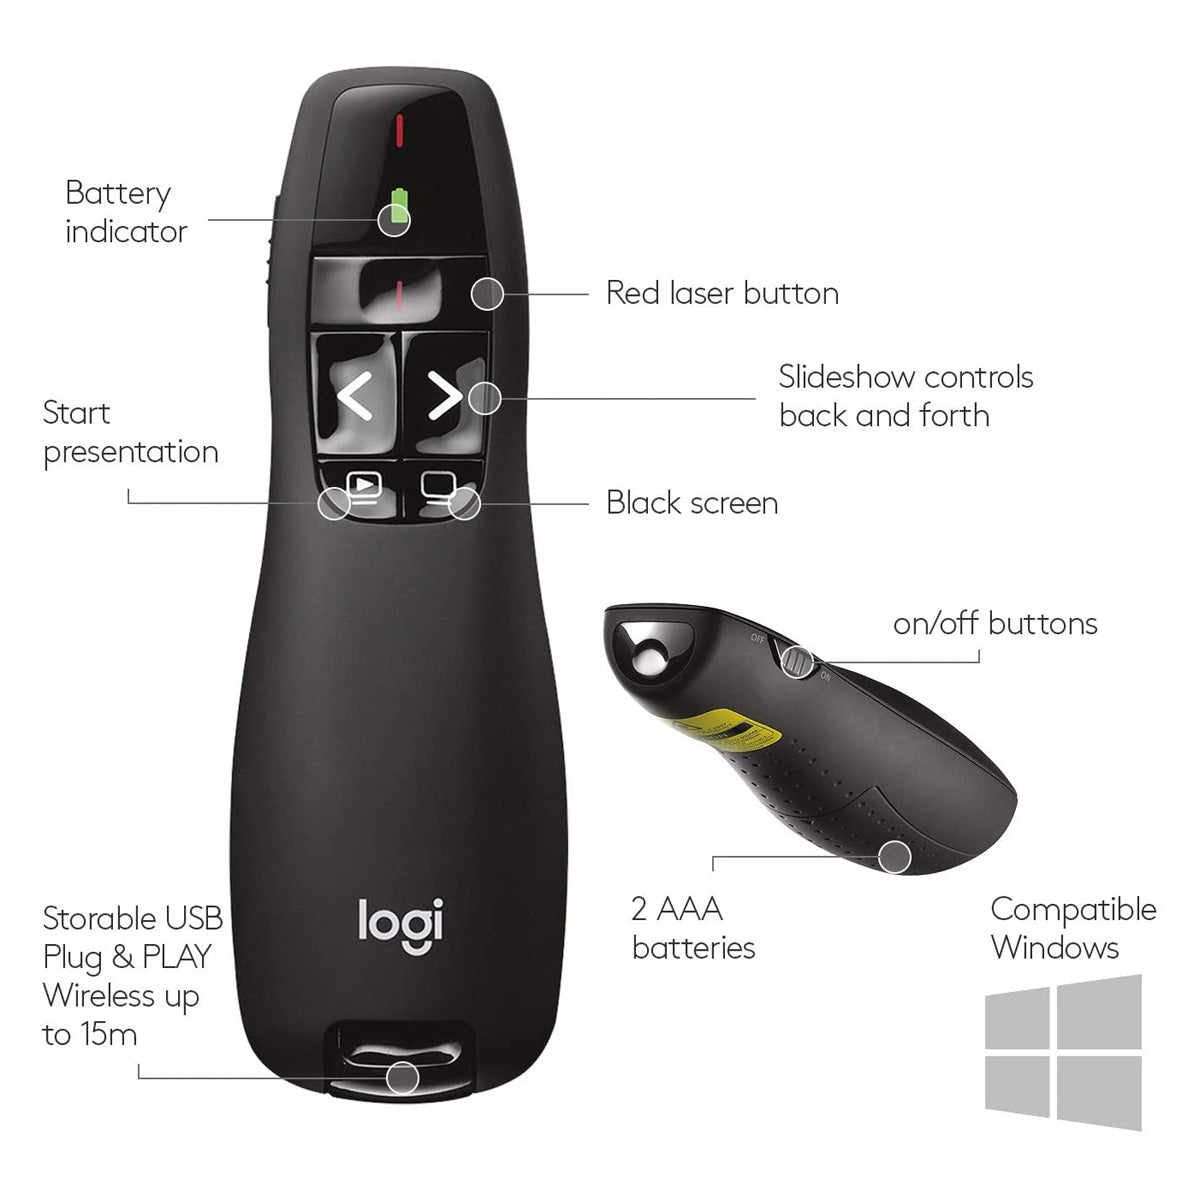 Logitech Wireless Presenter R400 with Presentation Remote Clicker and Laser Pointer